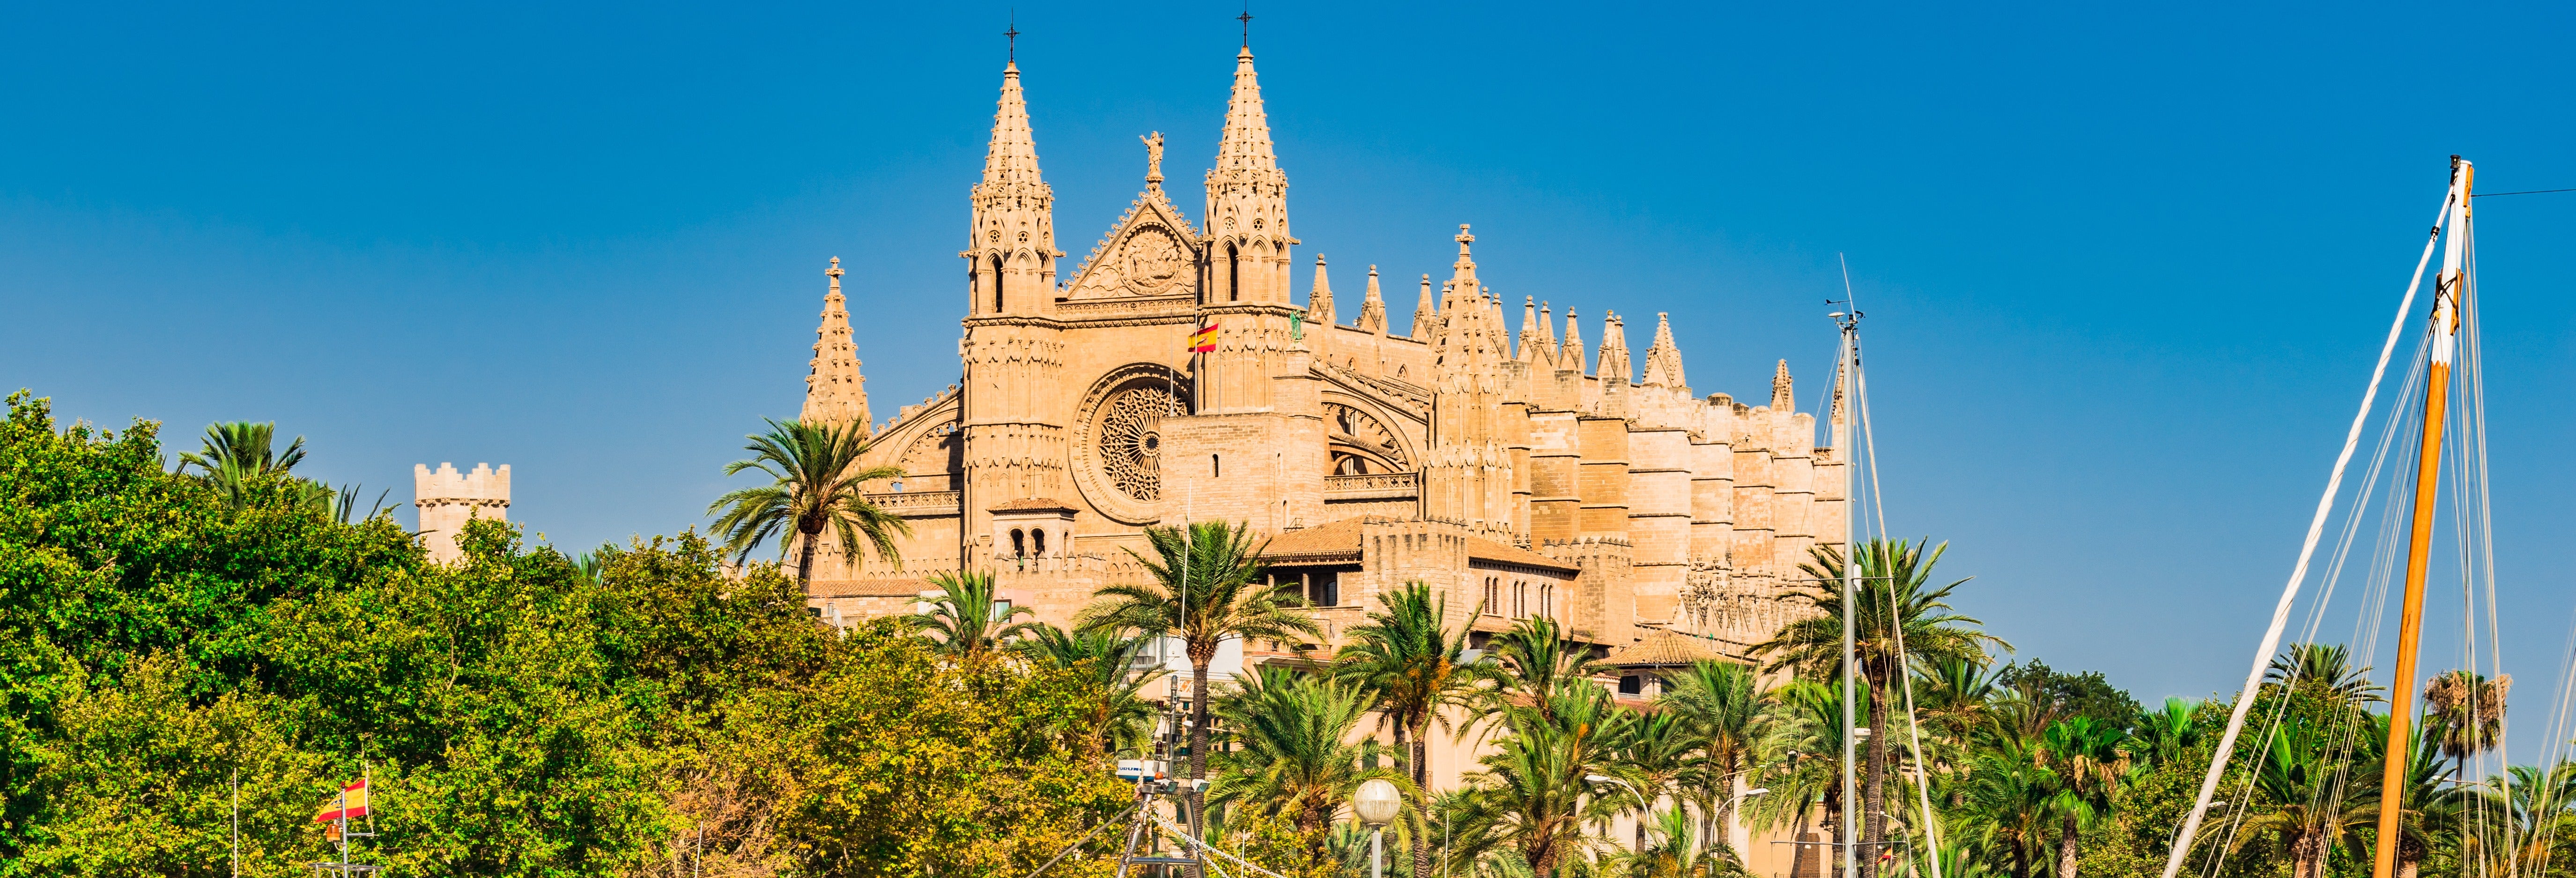 Tour por Palma y su catedral + Valldemossa